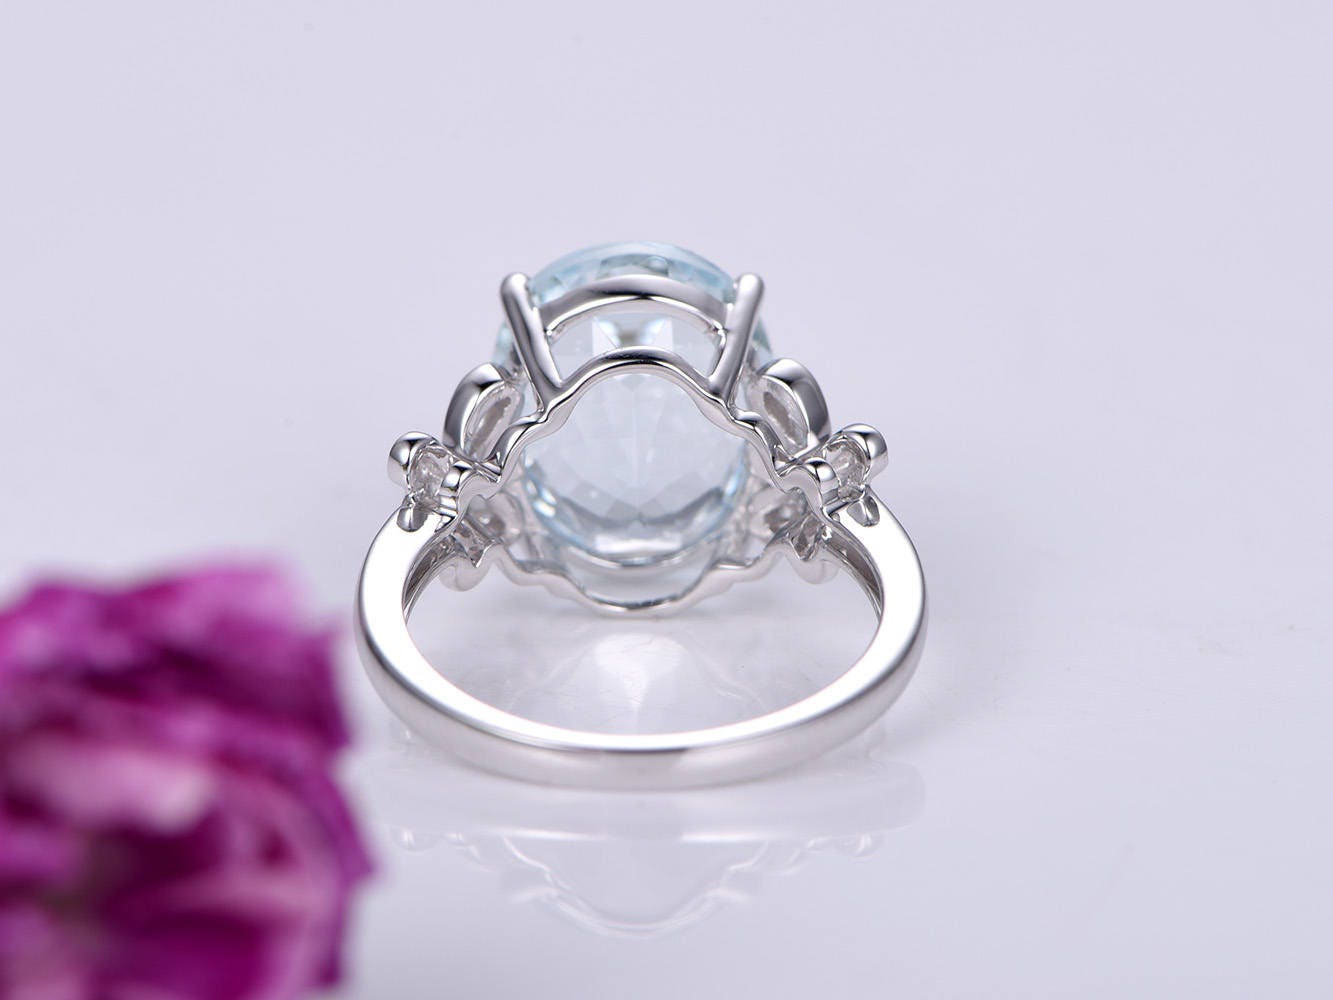 Aquamarine ring 10x12mm oval aquamarine engagement ring diamond ring butterfly design diamond band solid 14k white gold ring custom ring